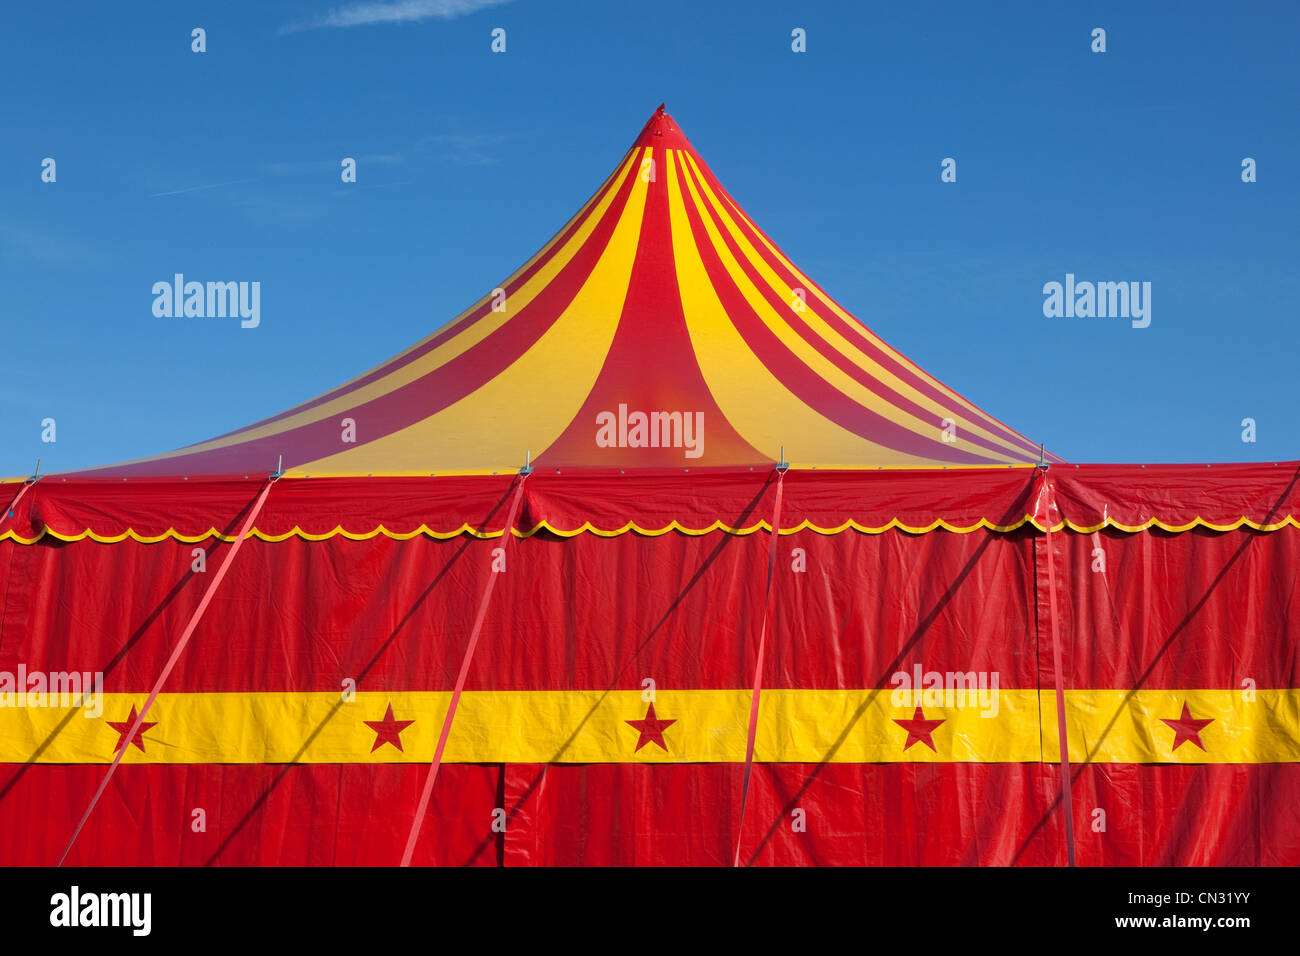 Circus tent Stock Photo